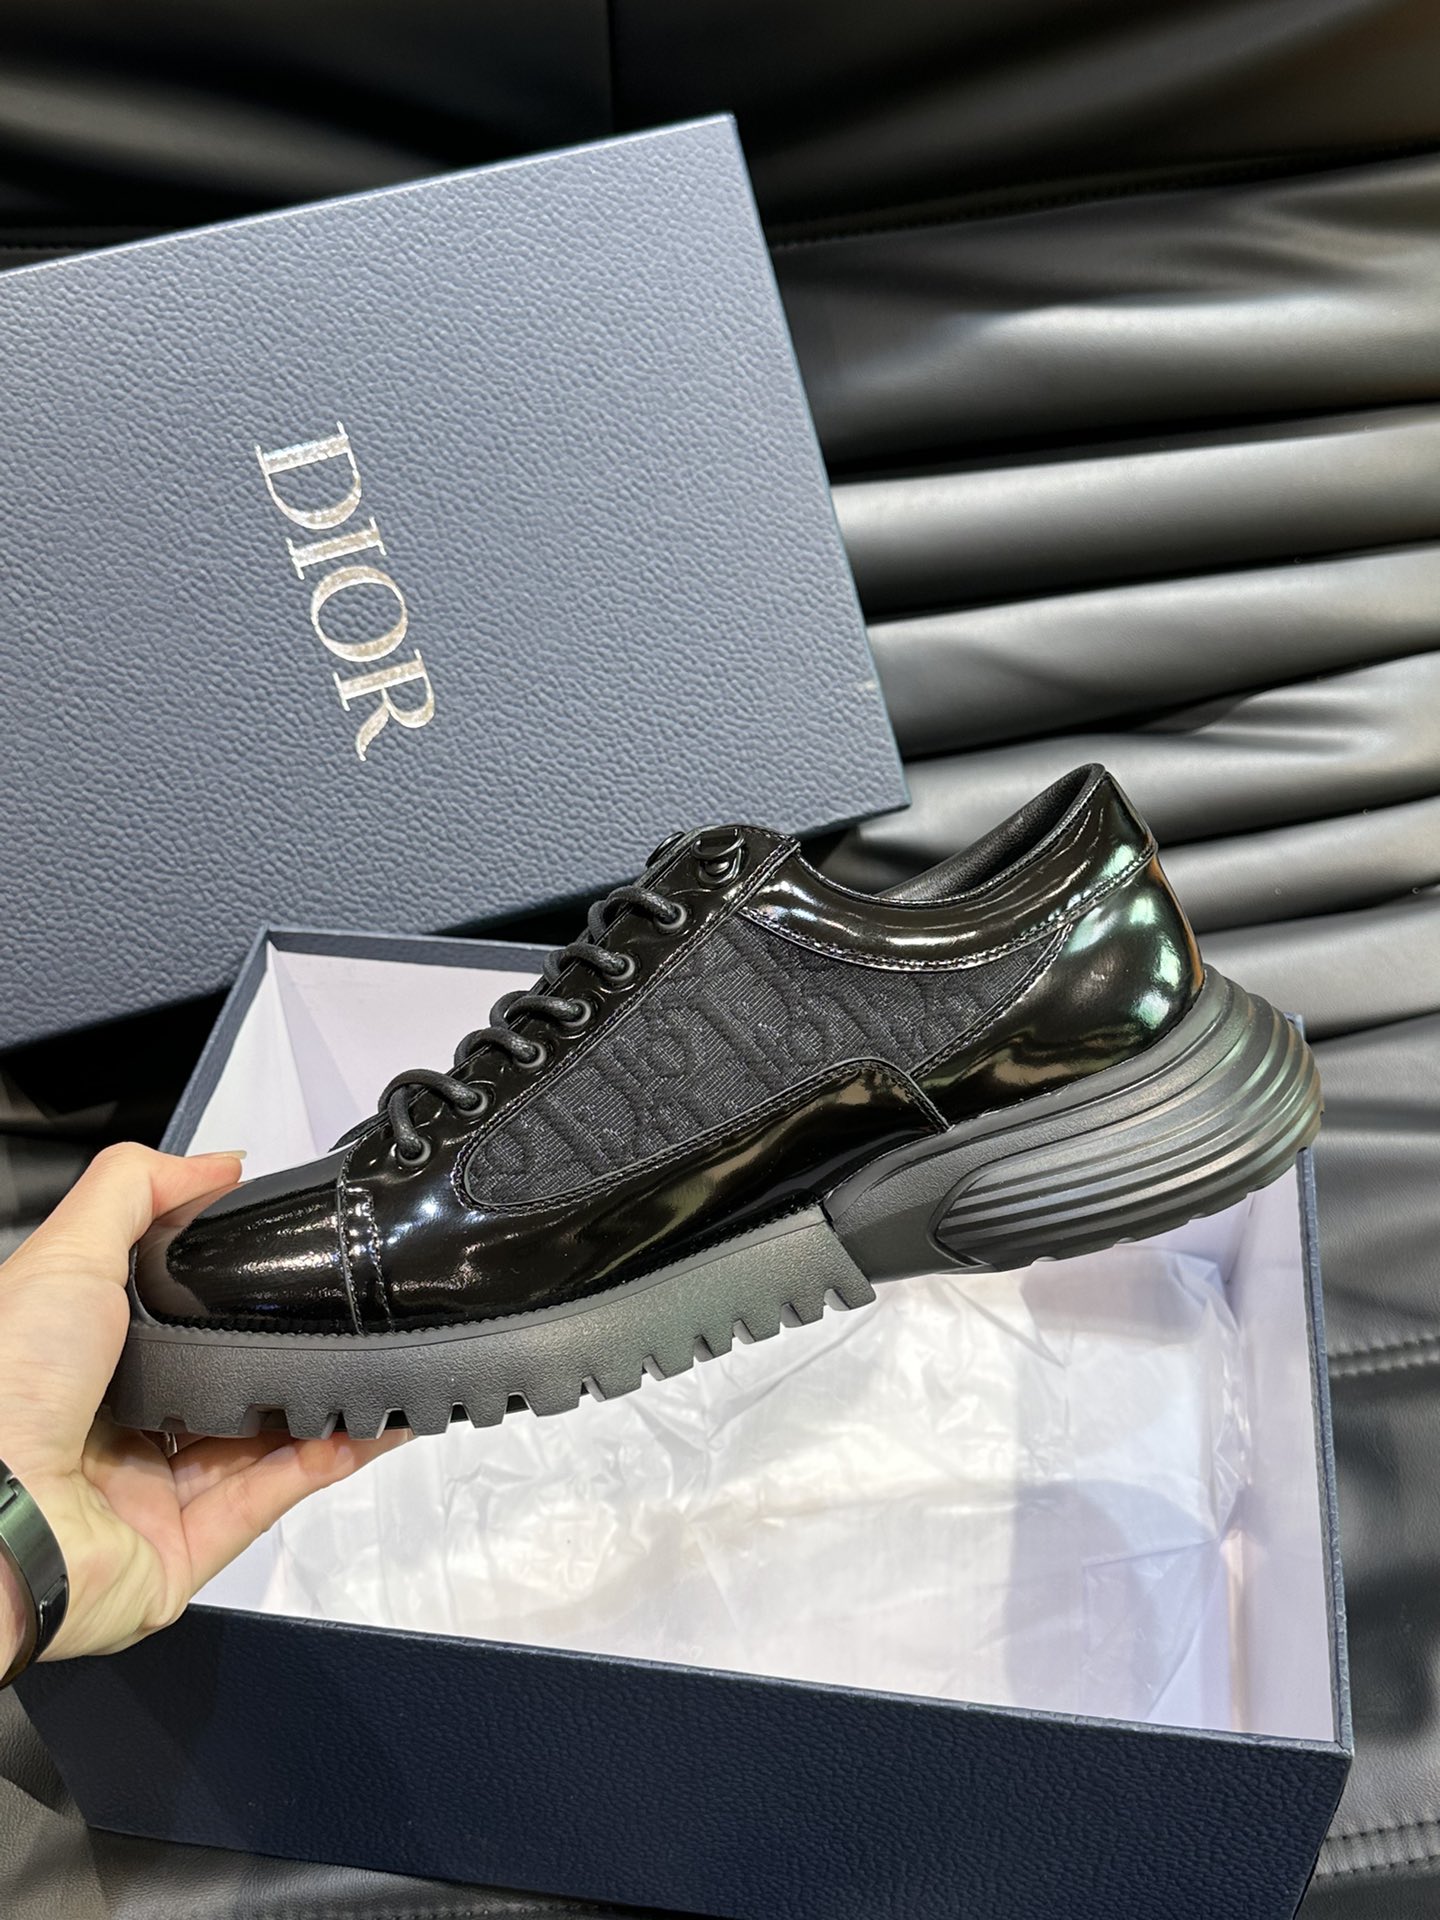 ️️DiorCombat德比鞋是二零二四春季男装系列新品呈现时尚设计与运动元素相结合的混搭风格采用黑色抛